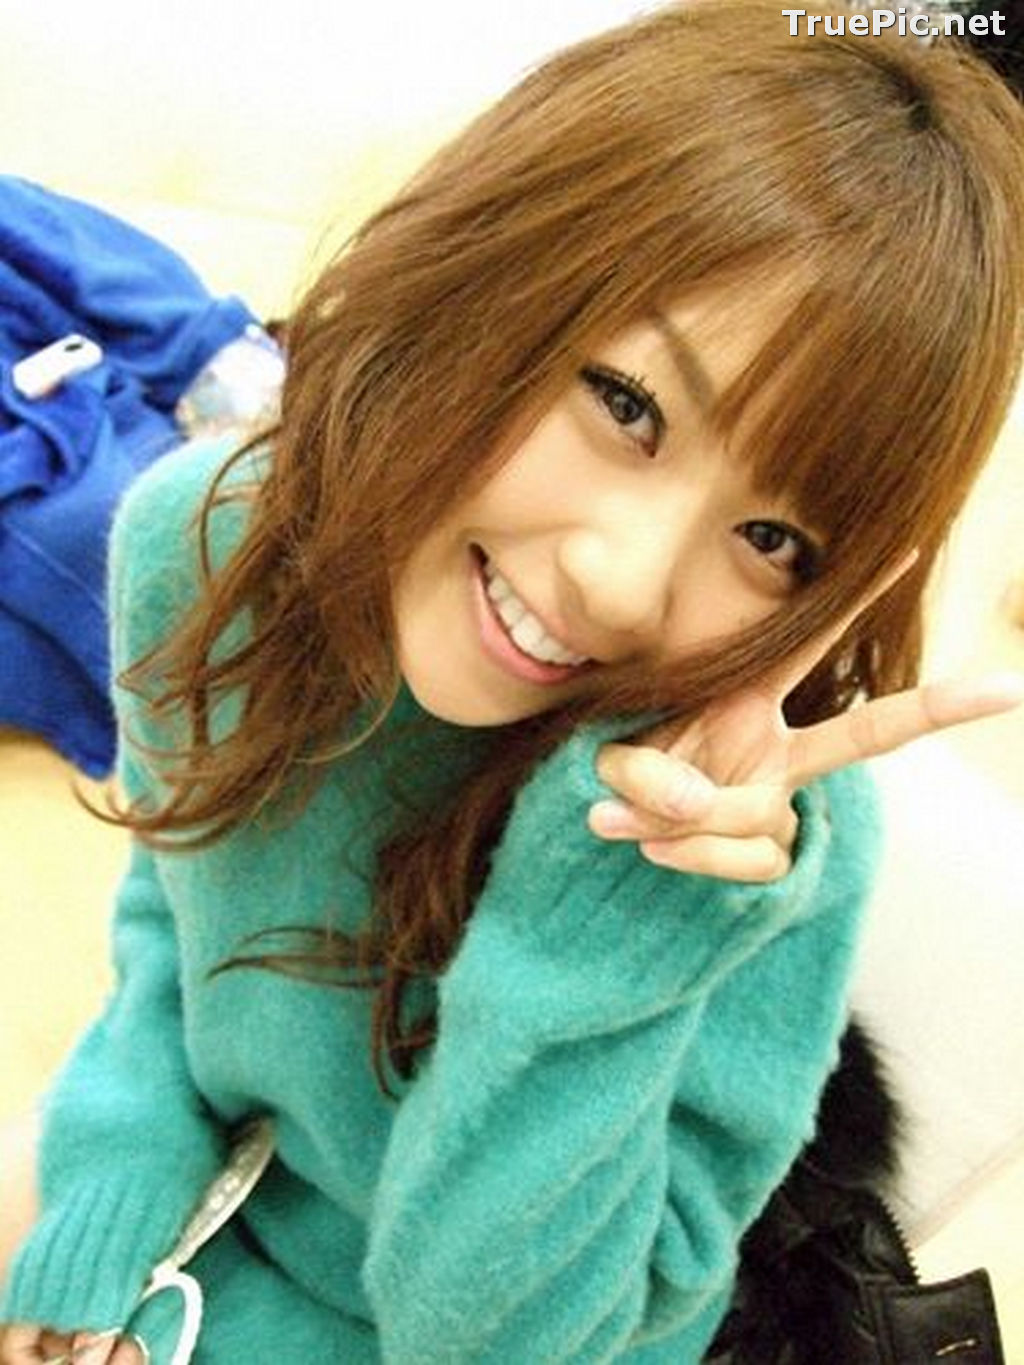 [ys Web] Vol 356 Japanese Gravure Idol And Actress Mai